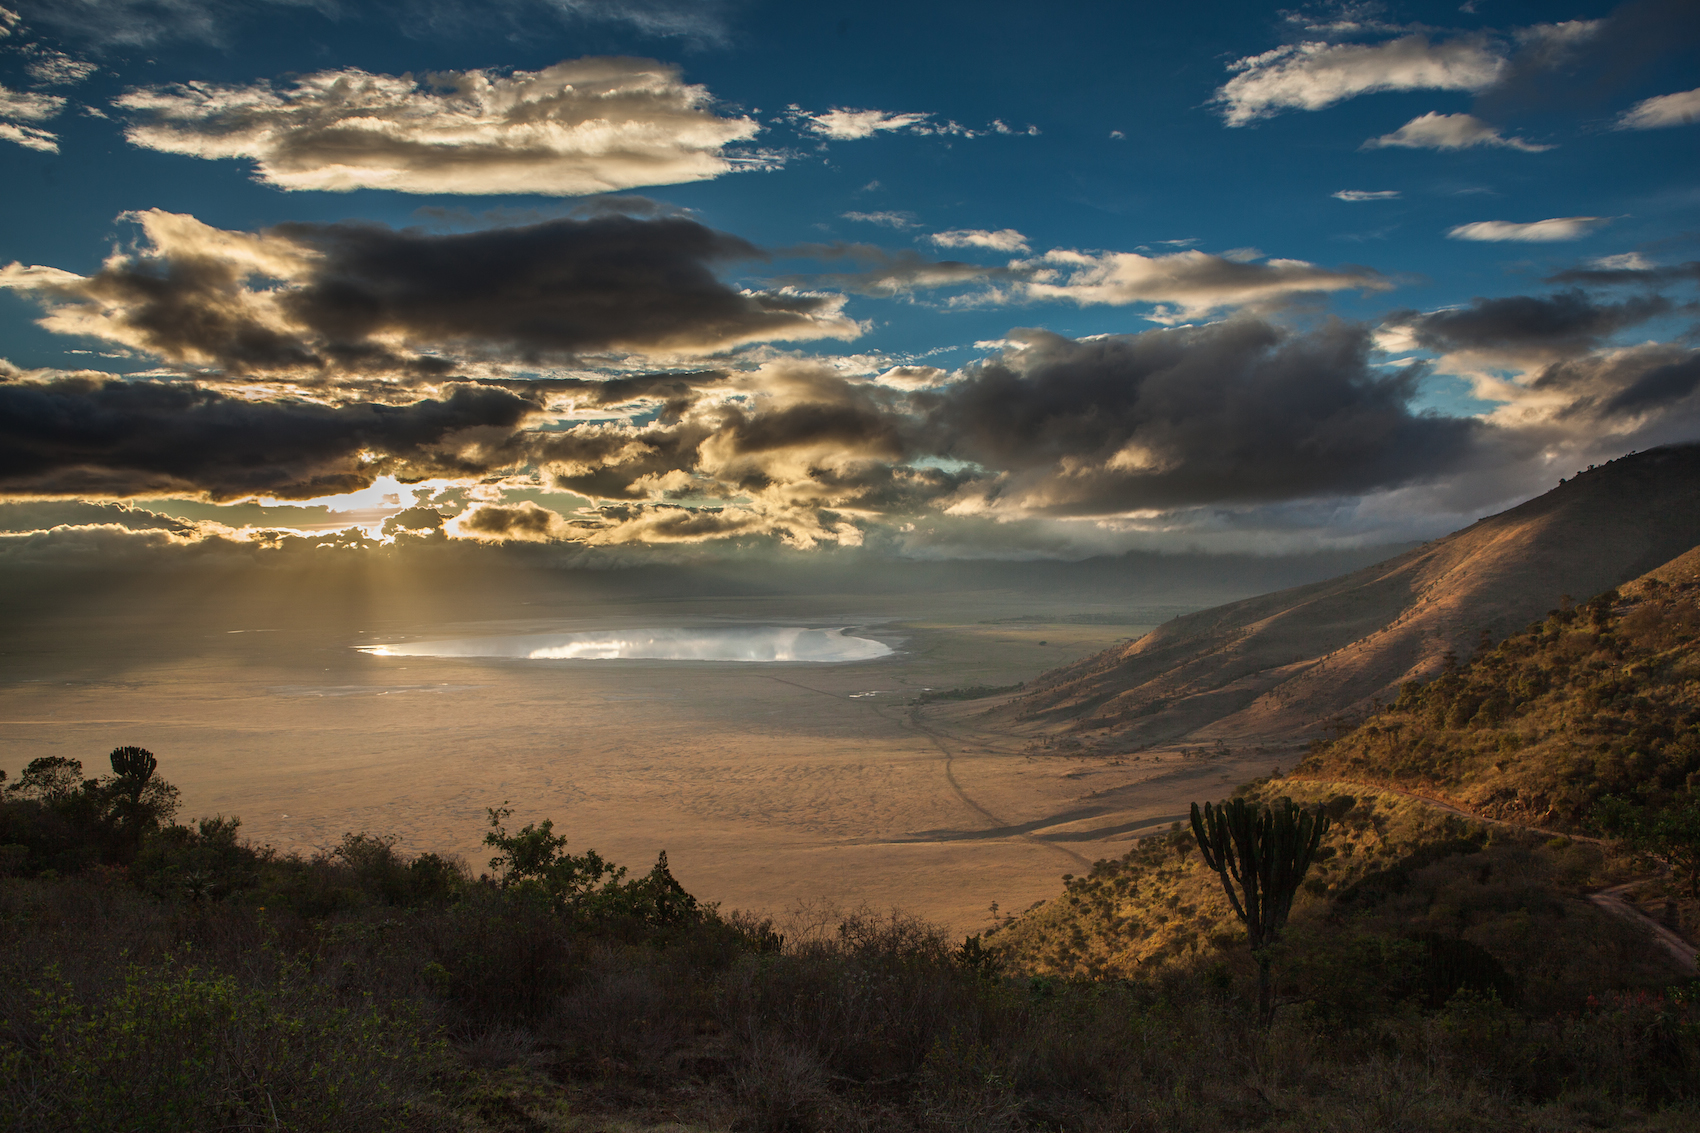 Ngorongoro Crater (Tanzania)